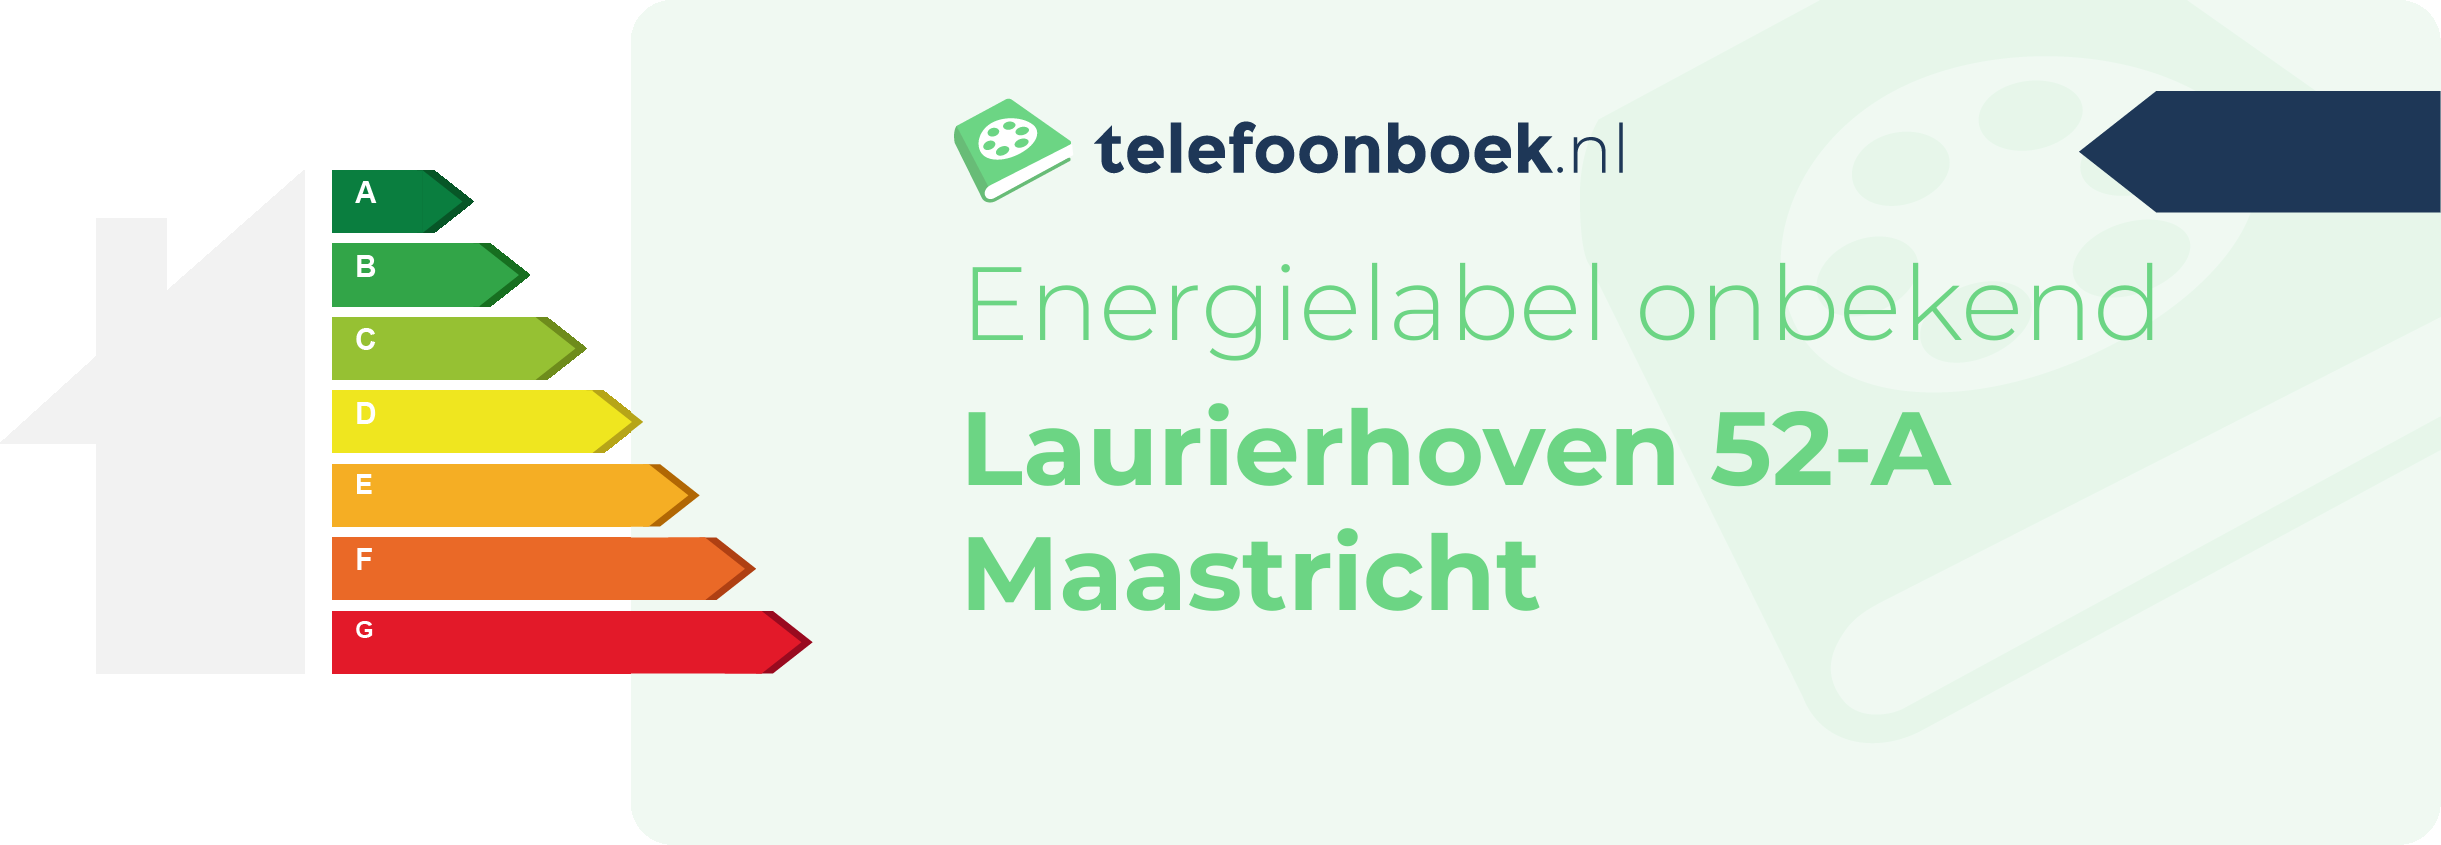 Energielabel Laurierhoven 52-A Maastricht